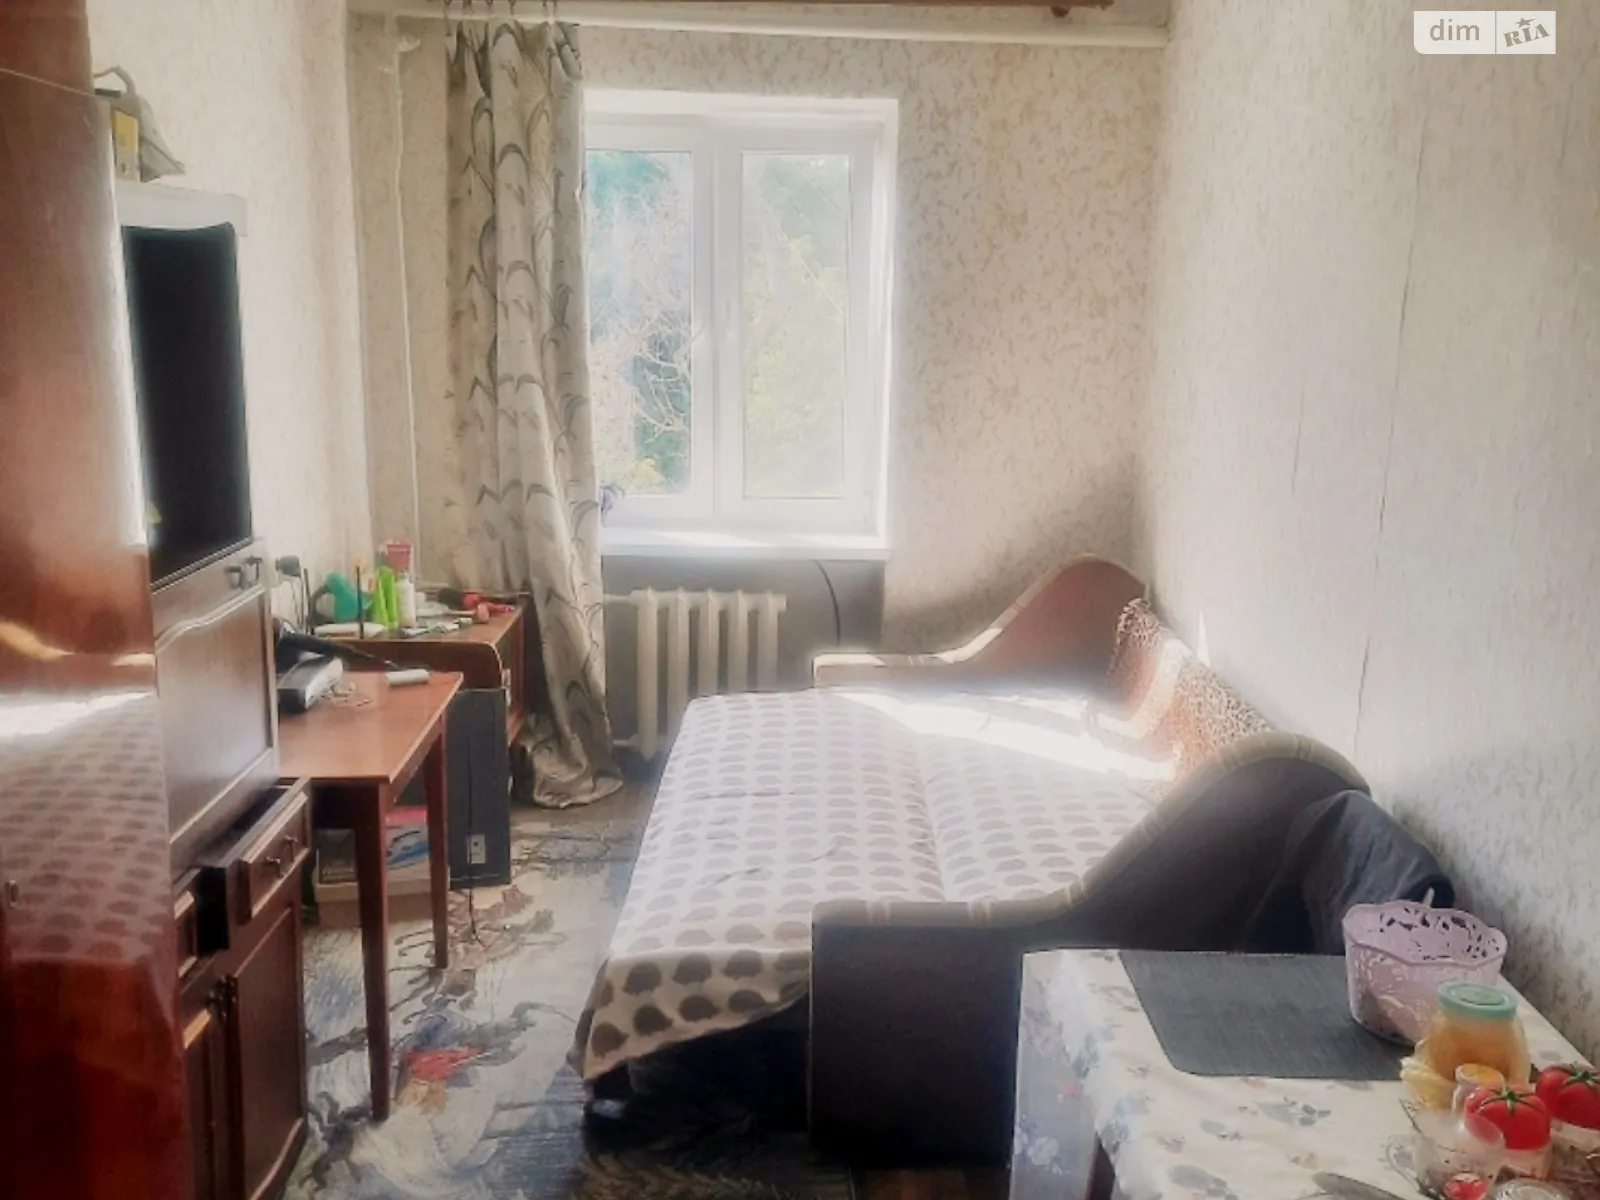 Продается комната 24 кв. м в Одессе, цена: 8000 $ - фото 1